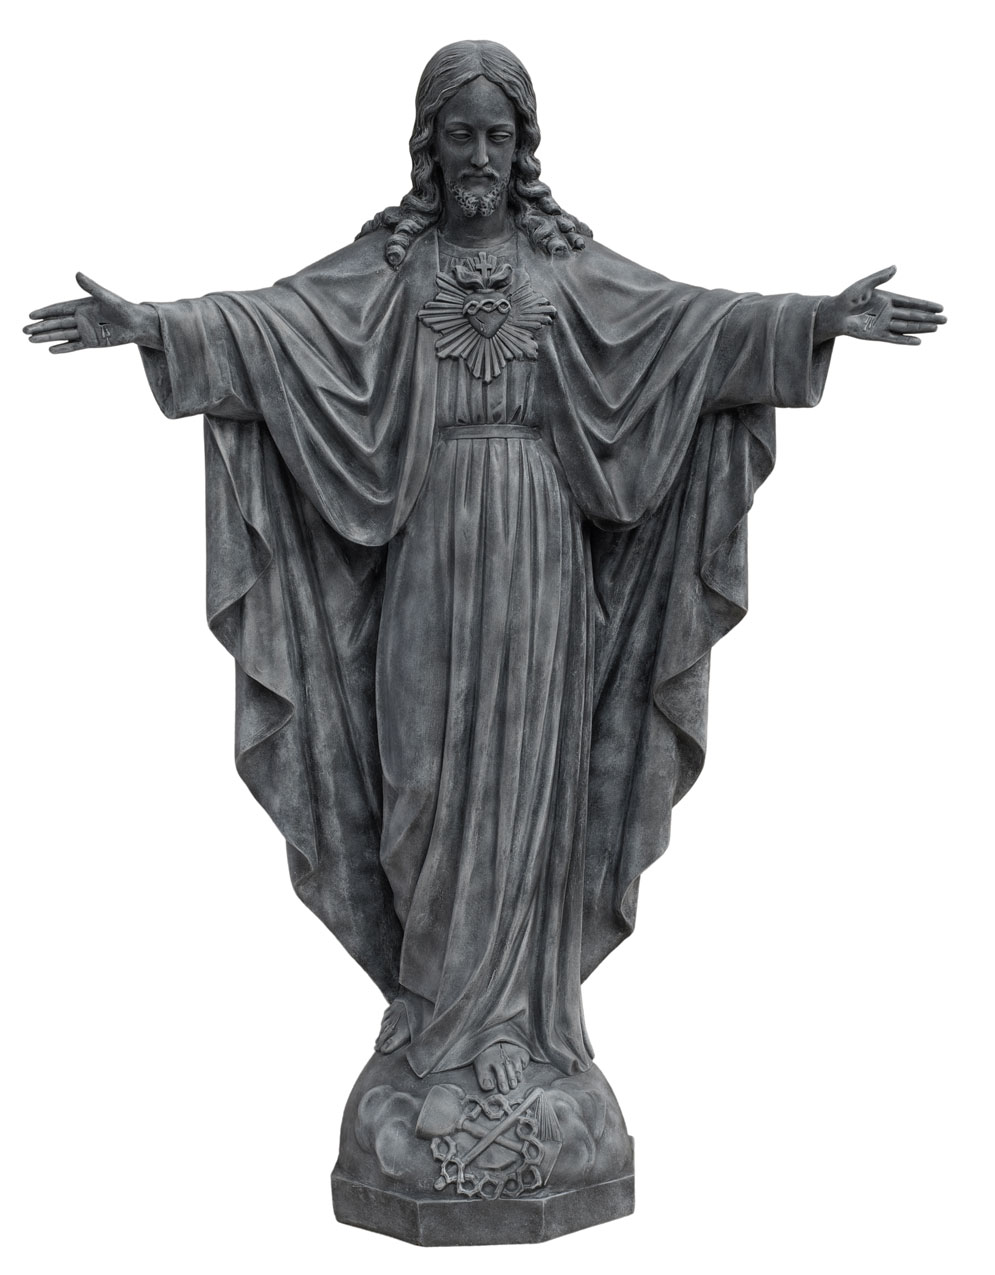 Serce Jezusa - Figura nagrobna - 135 cm - R 134